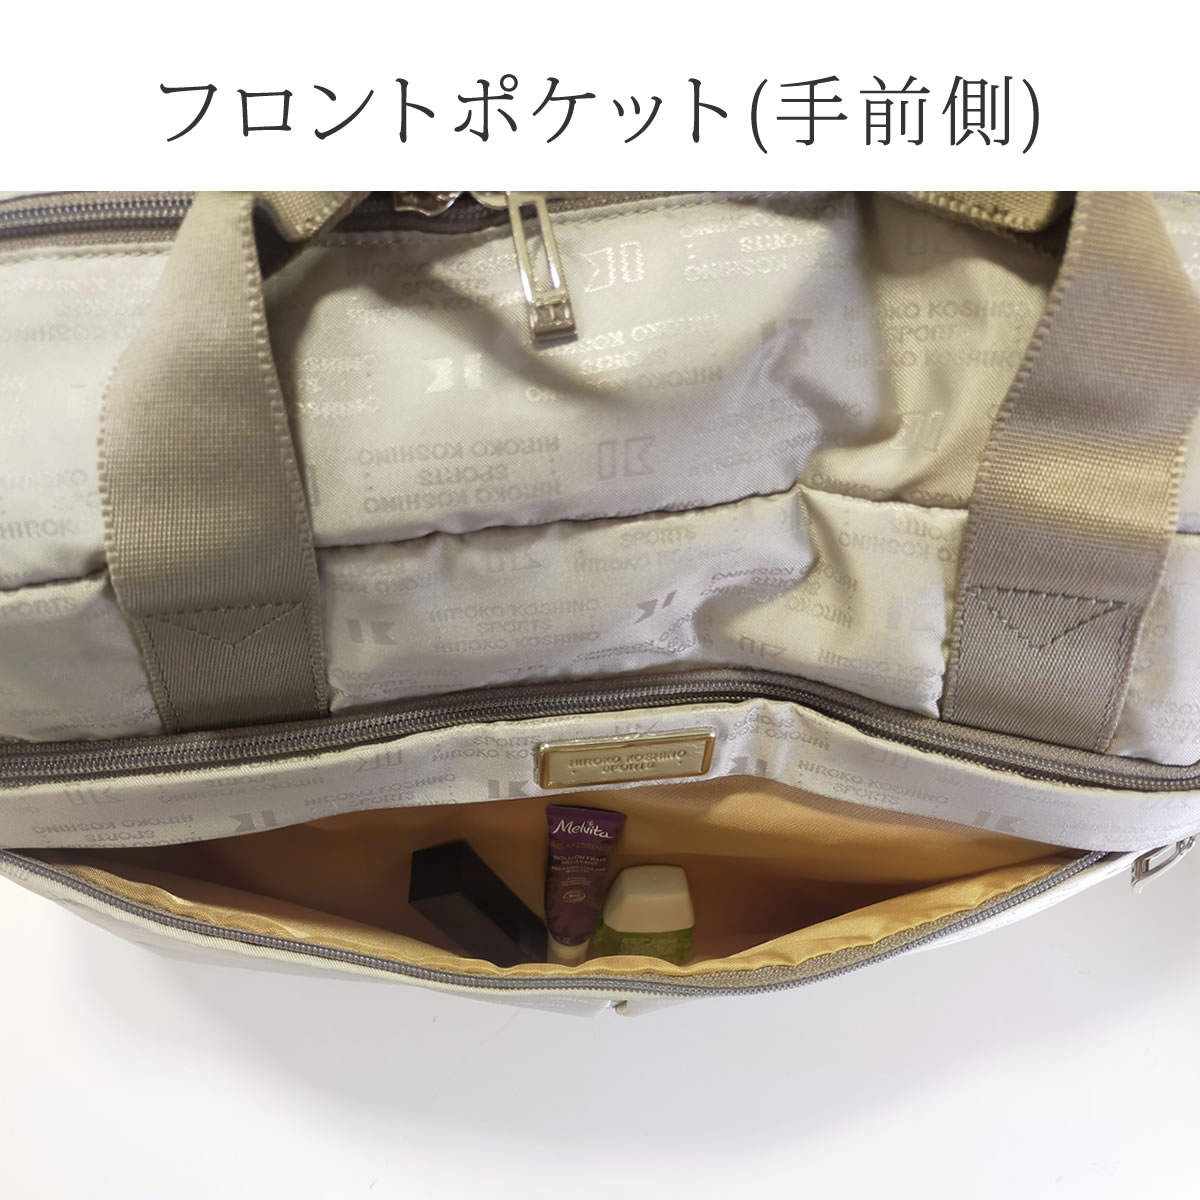 HIROKO KOSHINO ボストンバッグ レディース 軽量 トラベルボストン キャリーオン 旅行カバン ブランド 機内持ち込み 一泊二日 旅行バッグ ナイロン